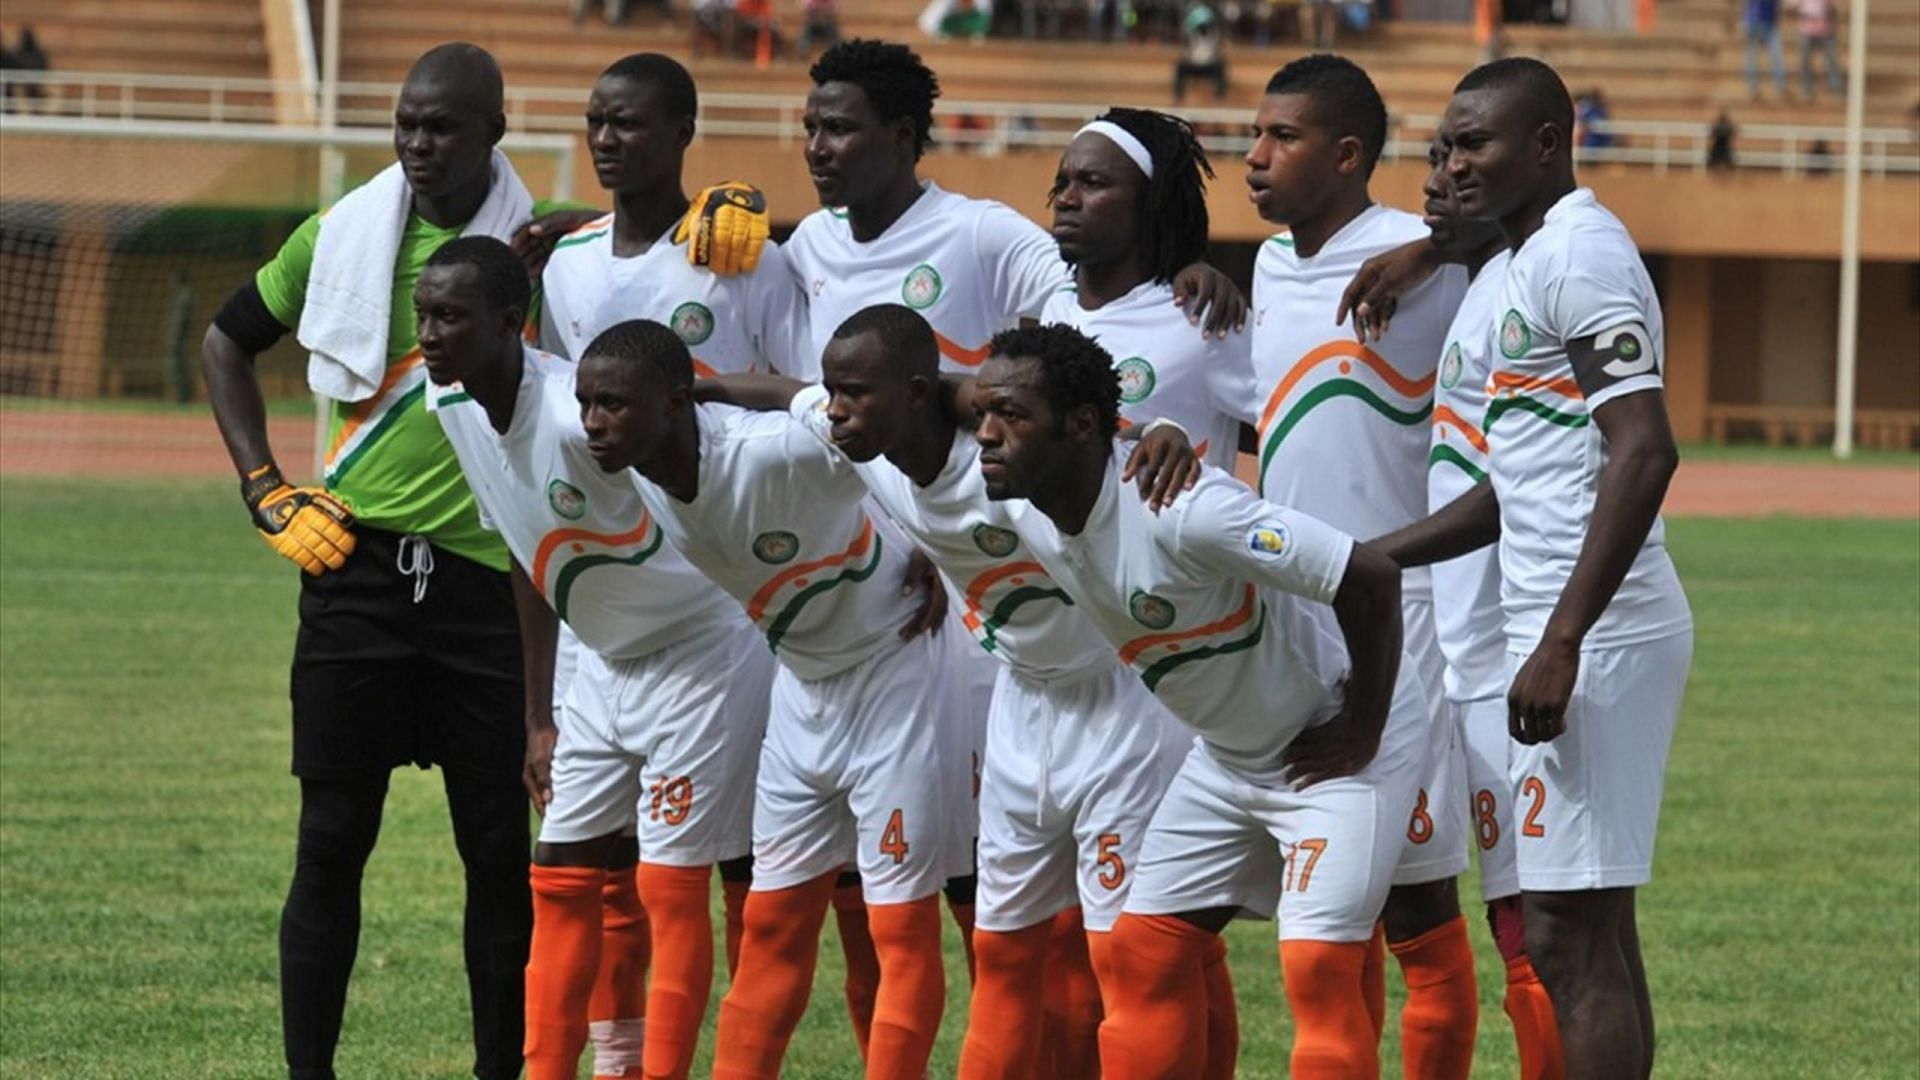 Niger team - courtesy of Eurosport